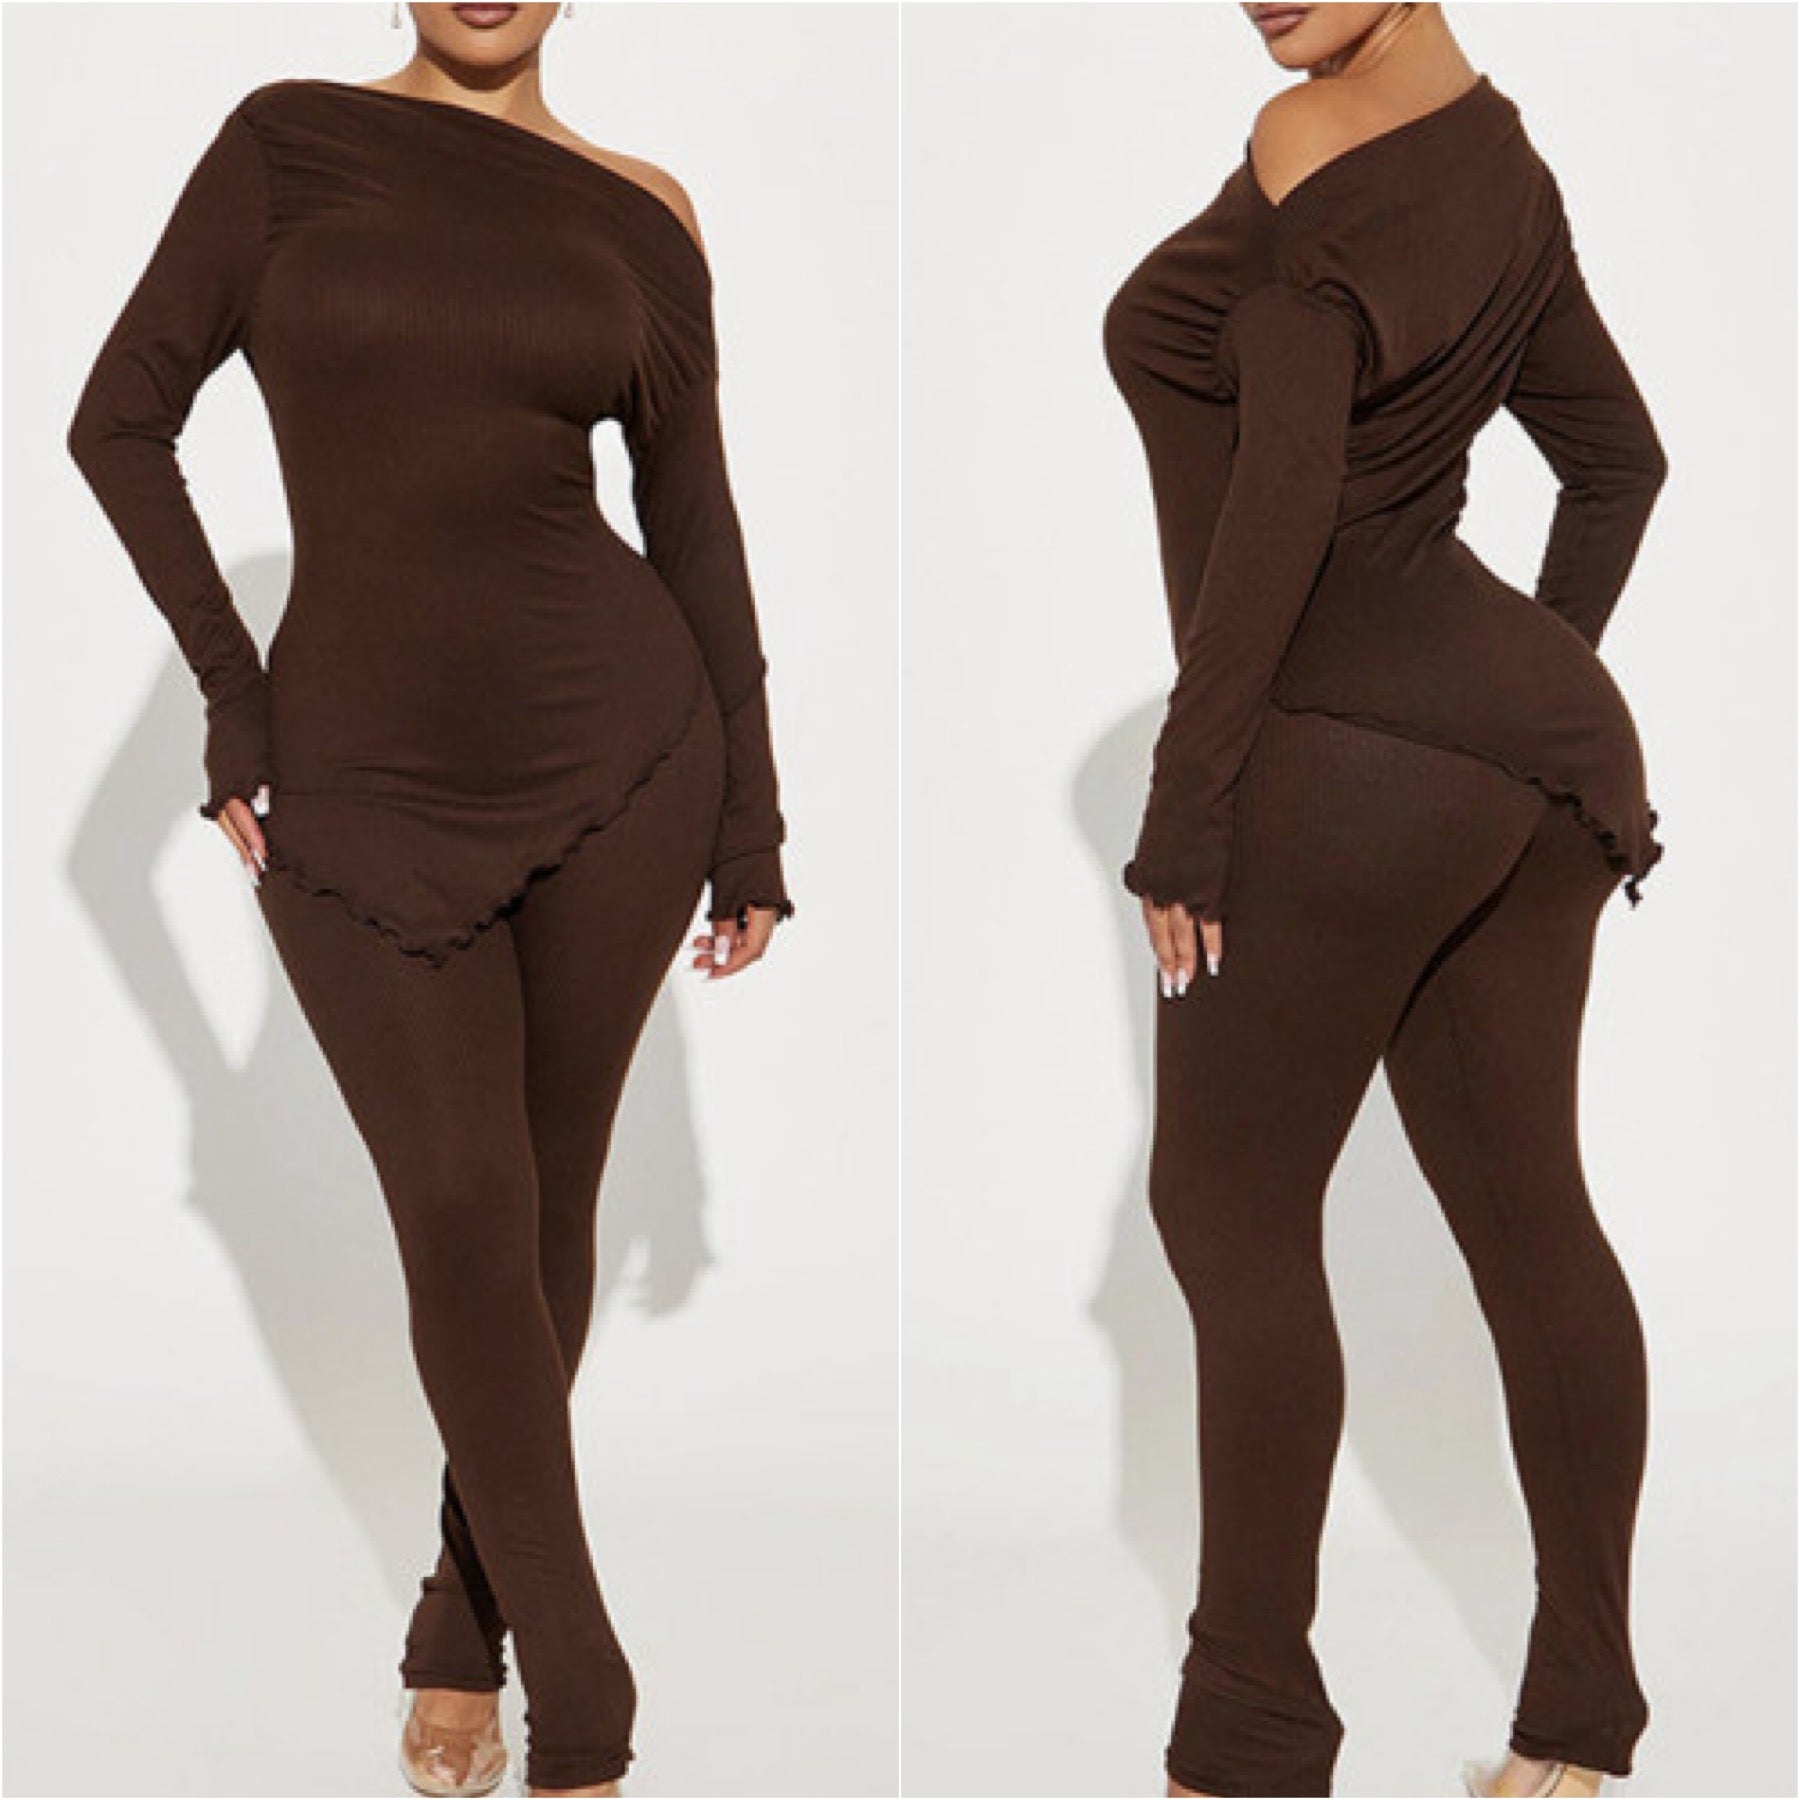 “Godiva” Chocolate Brown Ribbed 2 Piece Long Sleeve Asymmetrical Top & Legging Set